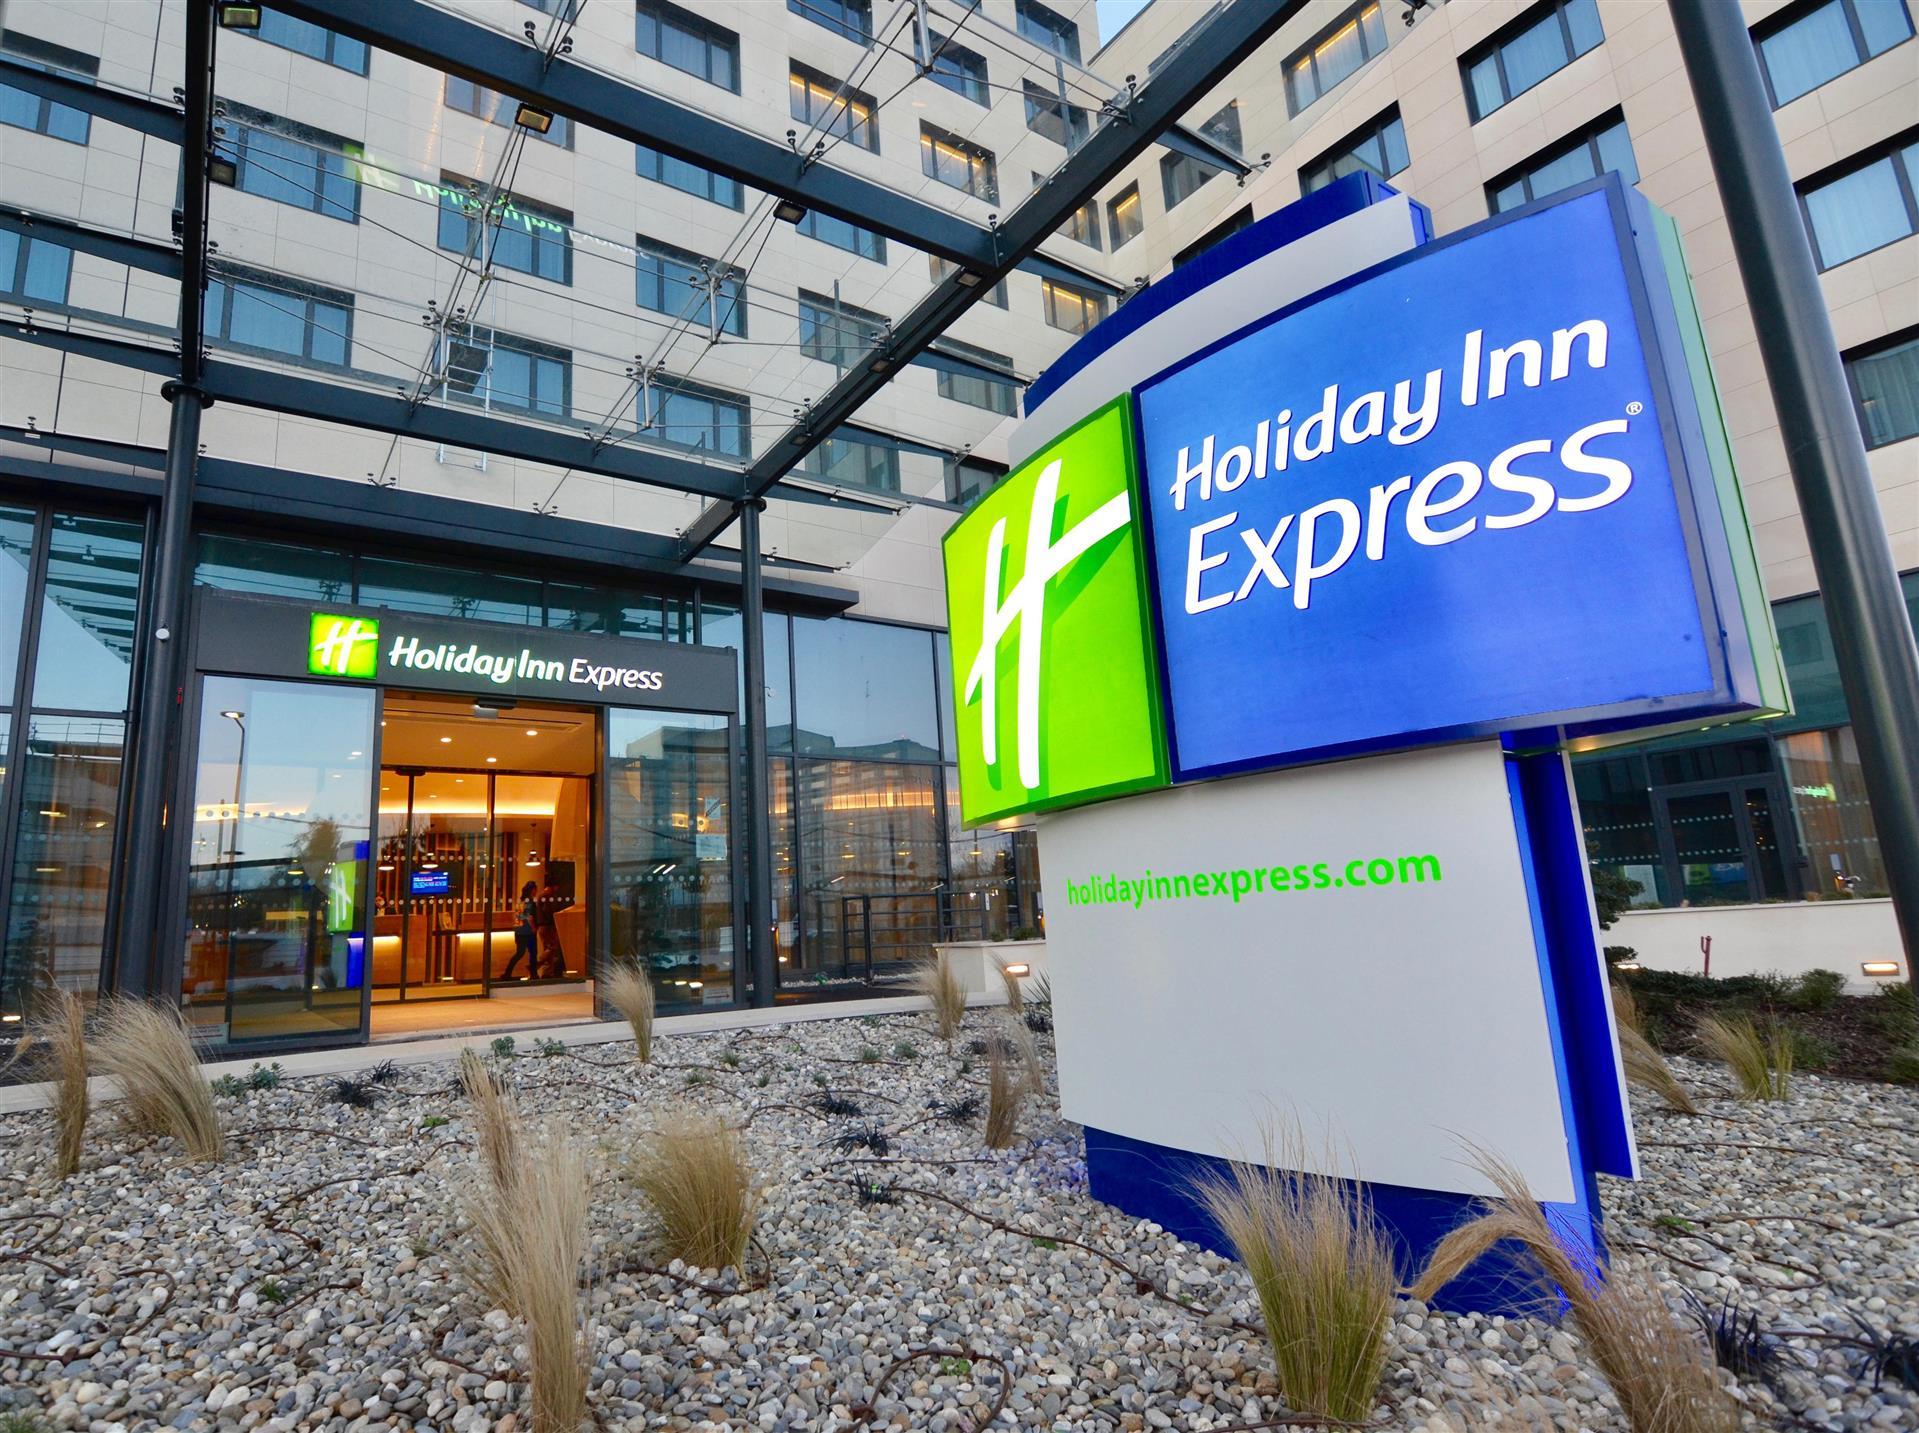 Holiday Inn Express Paris - CDG Airport in Paris, FR